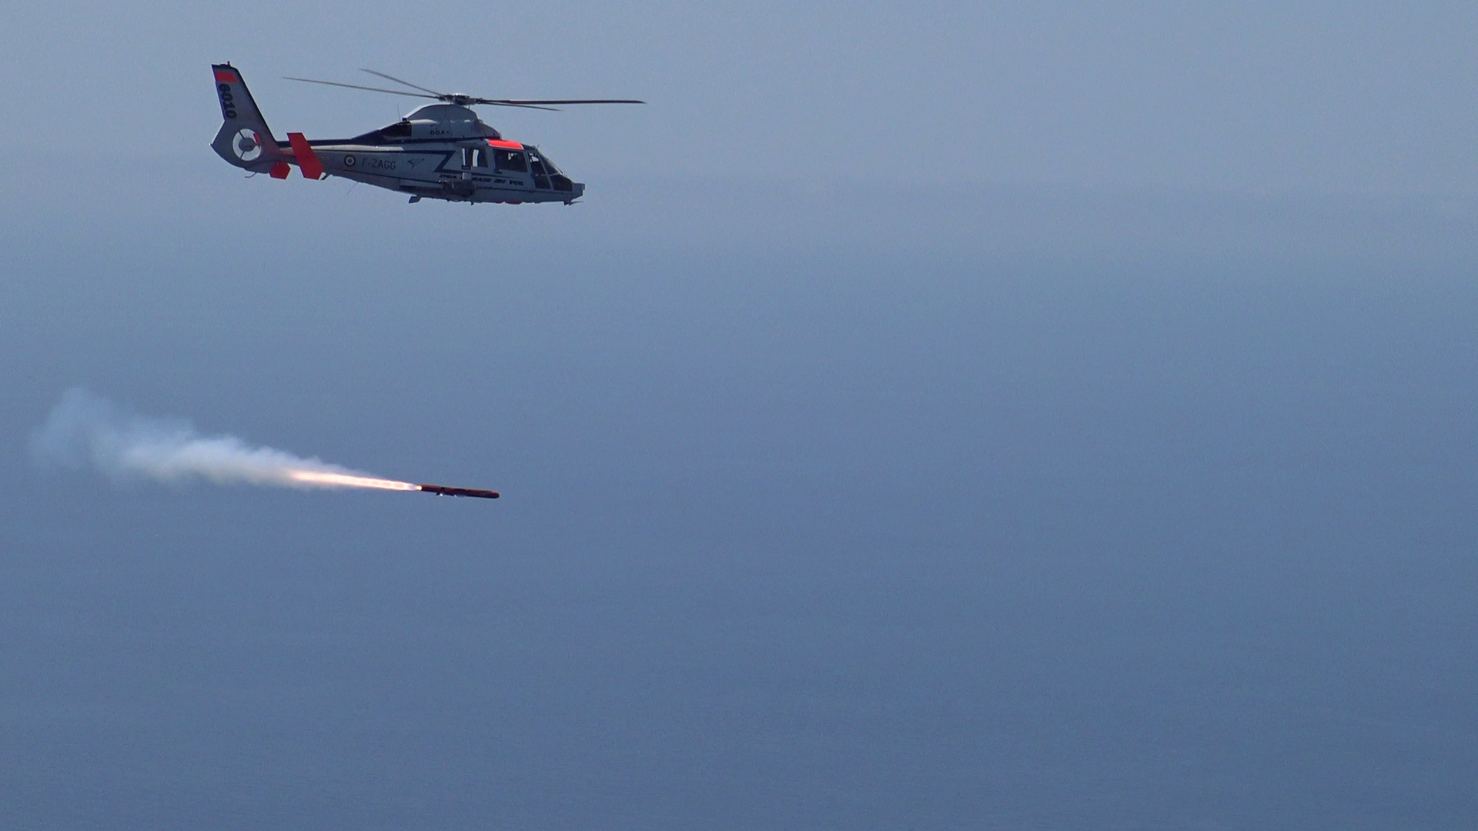 Third test firing for MBDA Sea Venom missile